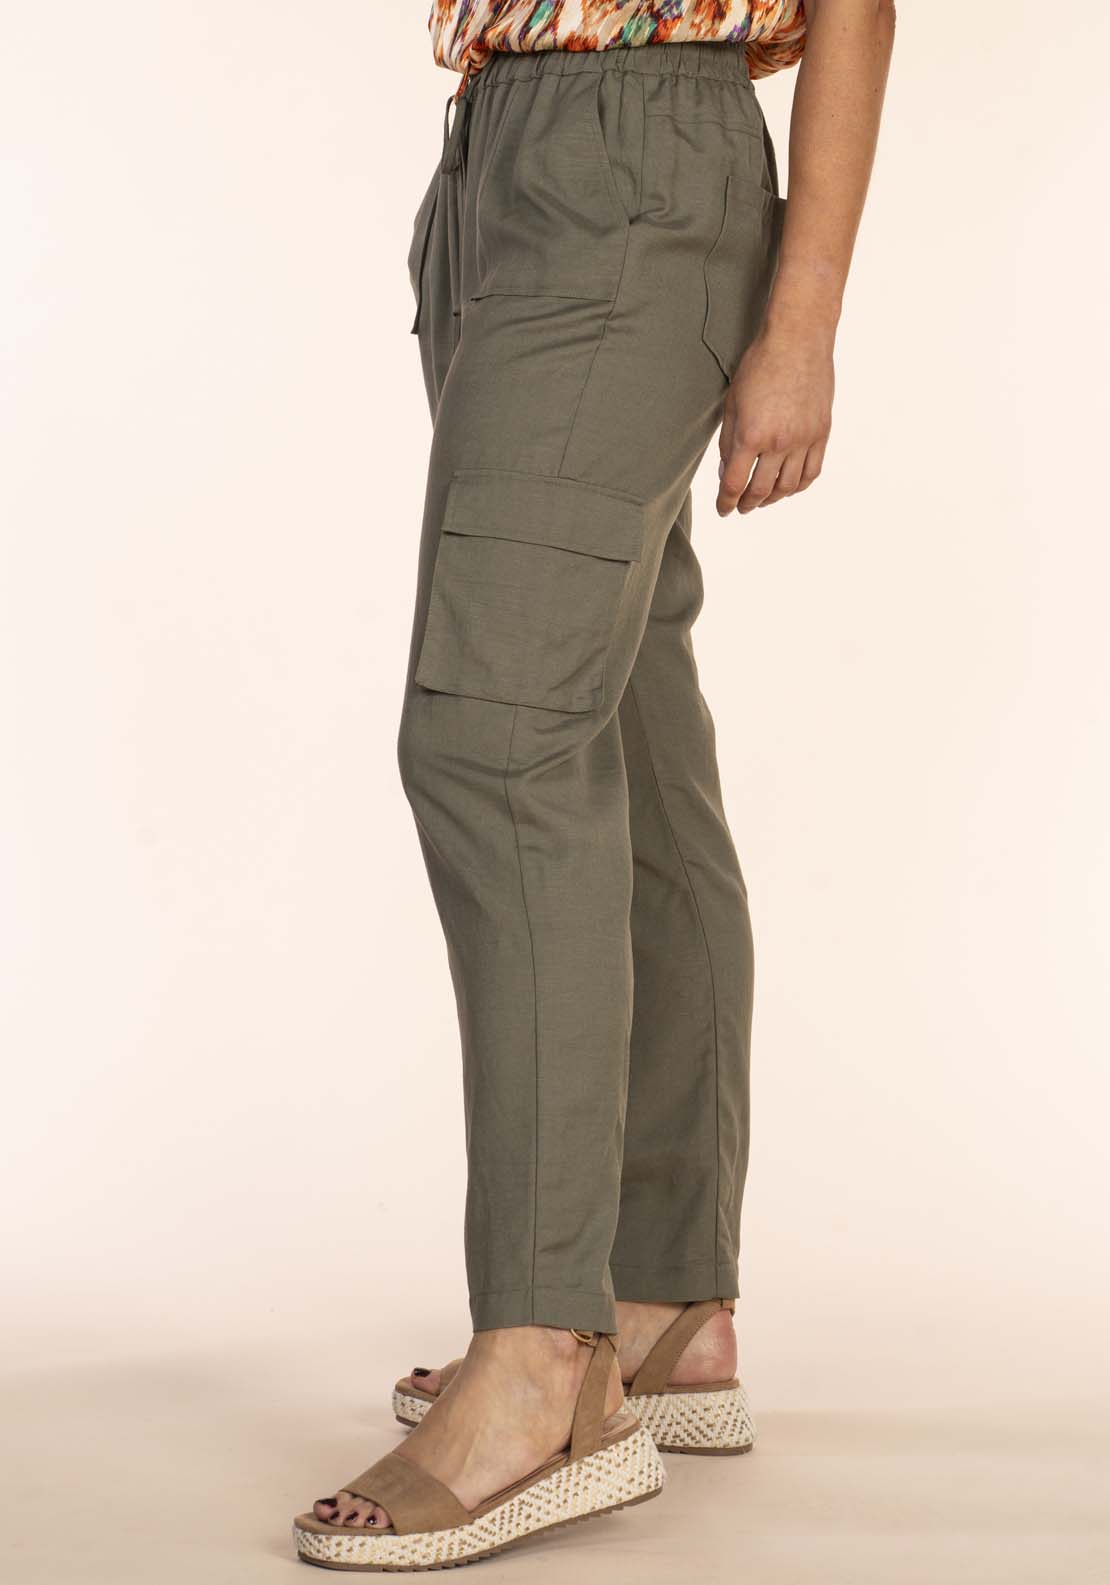 Naoise Drawstring Linen Pants - Green 2 Shaws Department Stores